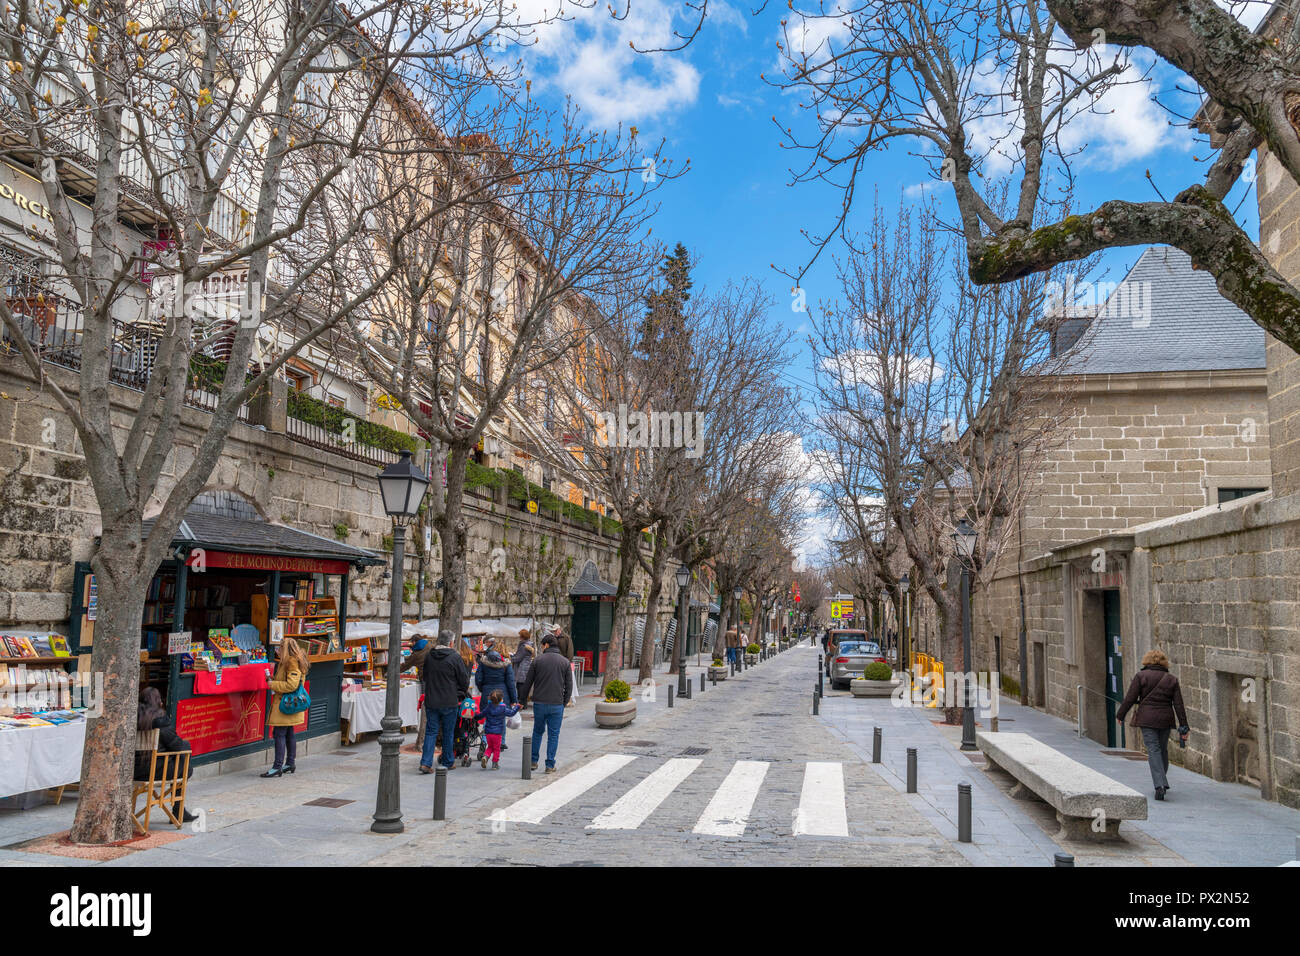 Calle Floridablanca in the centre of the town of San Lorenzo de El Escorial, near Madrid, Spain Stock Photo